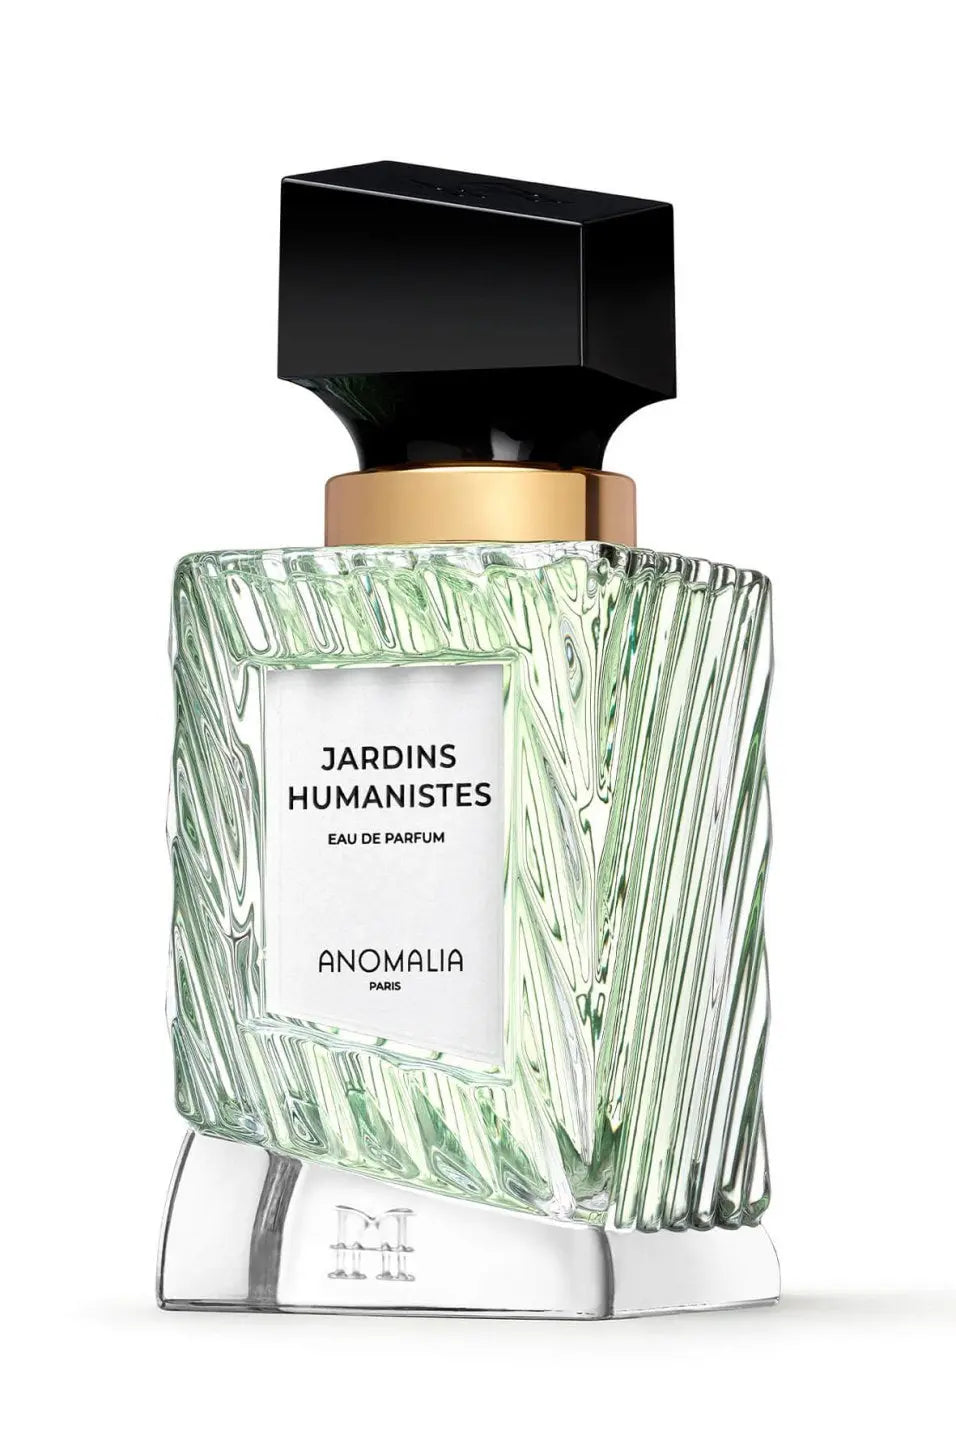 Anomalia Eau de parfum Jardins Humanistes - 70 ml